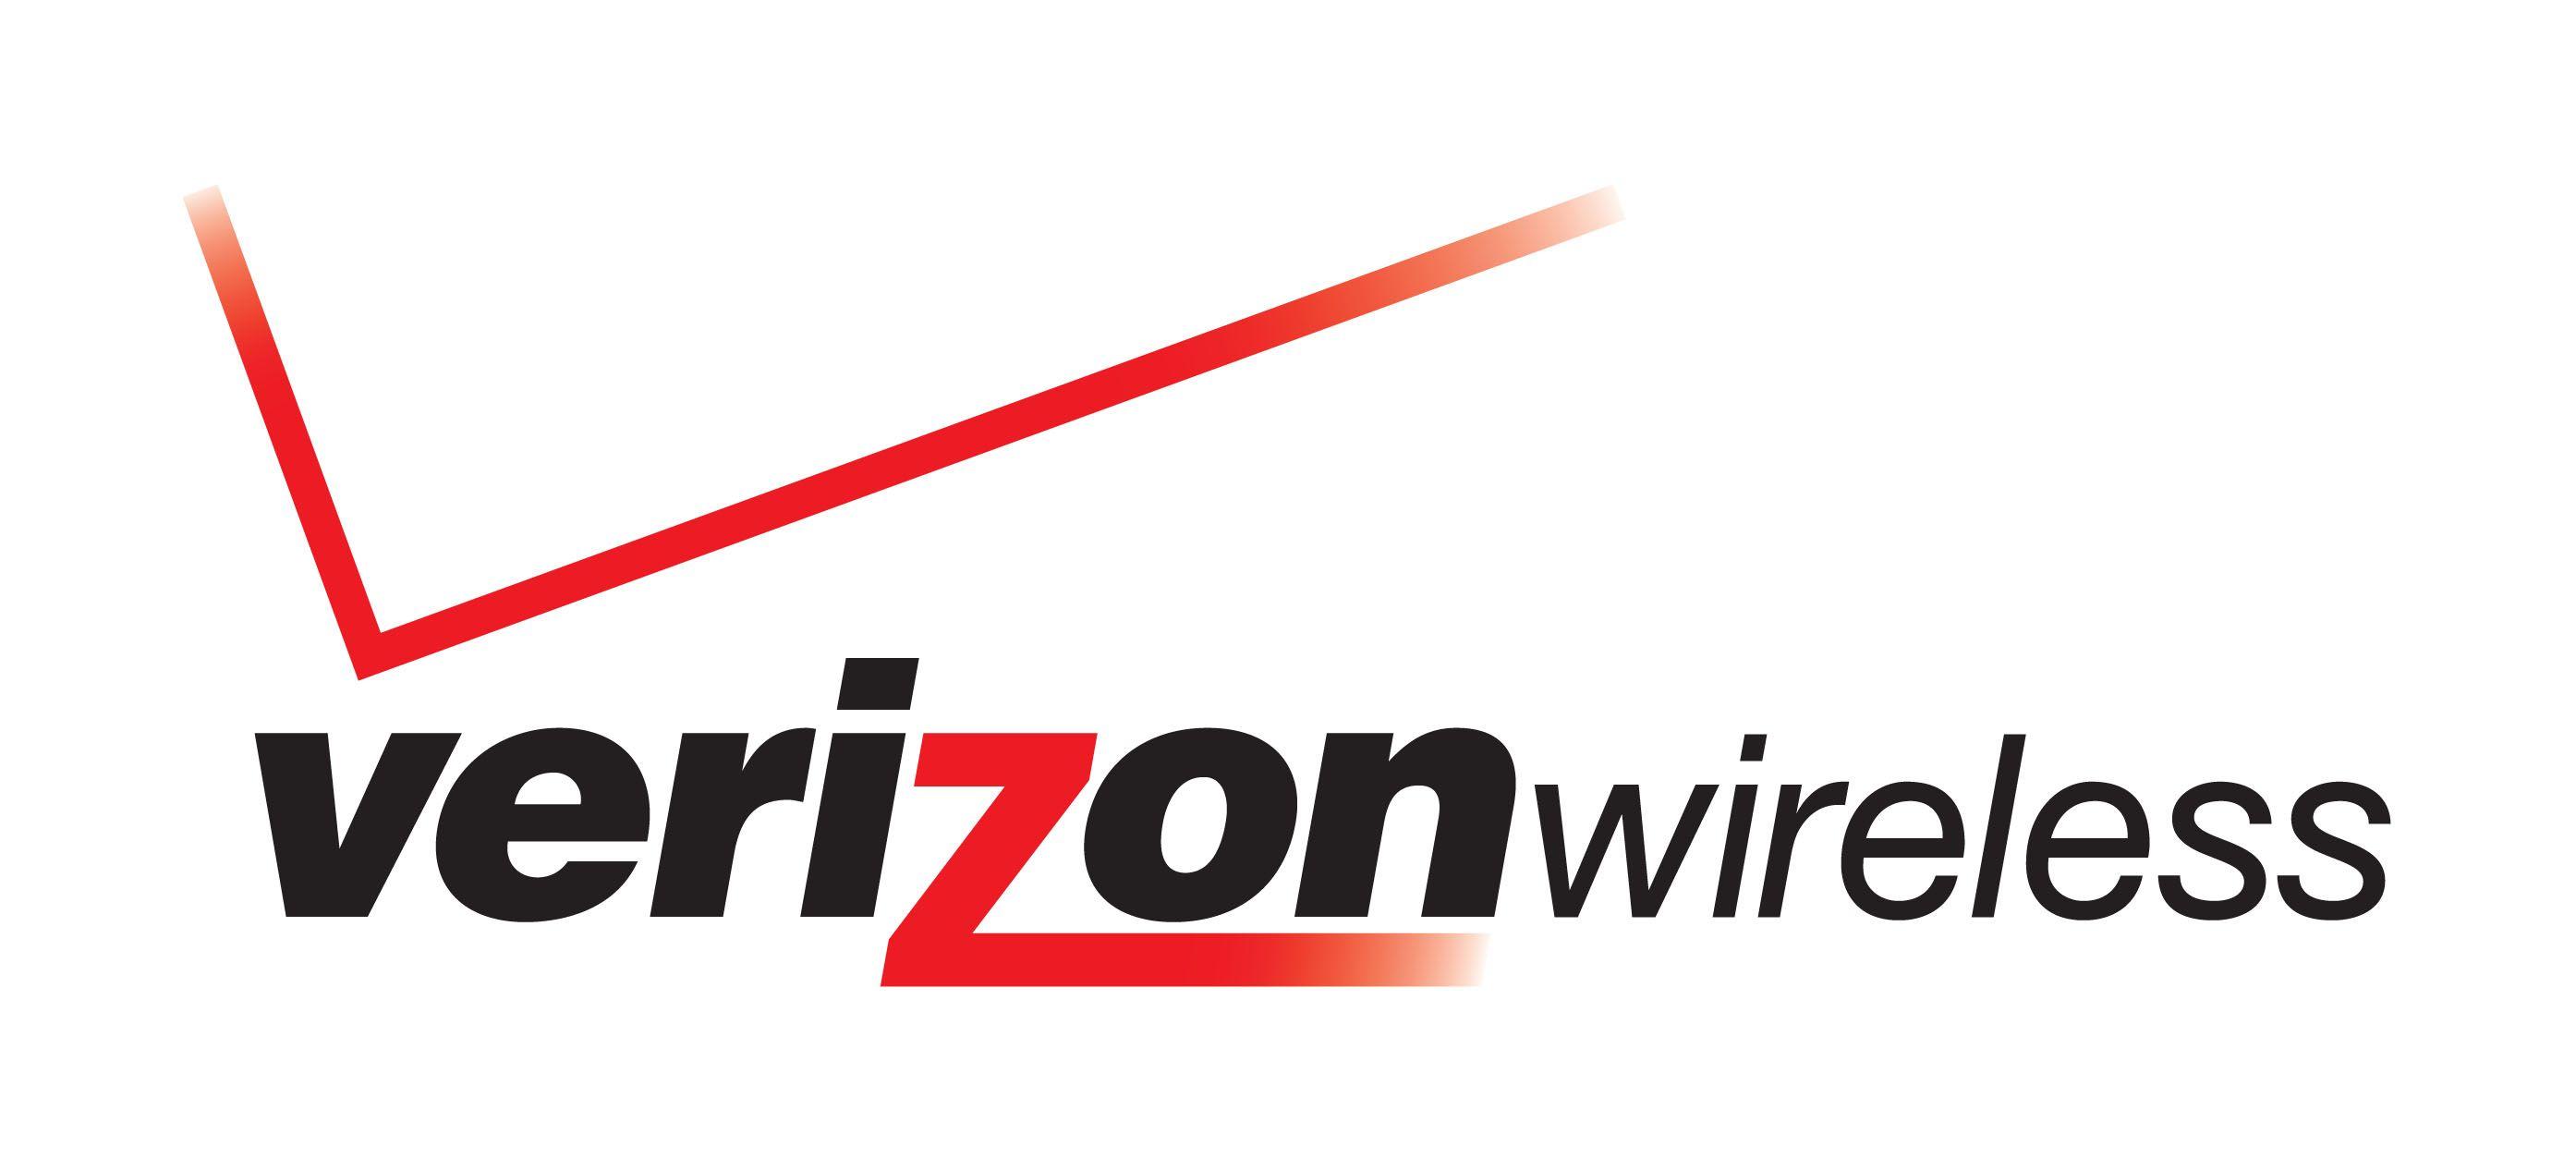 Old Verizon Logo - Verizon wireless old Logos